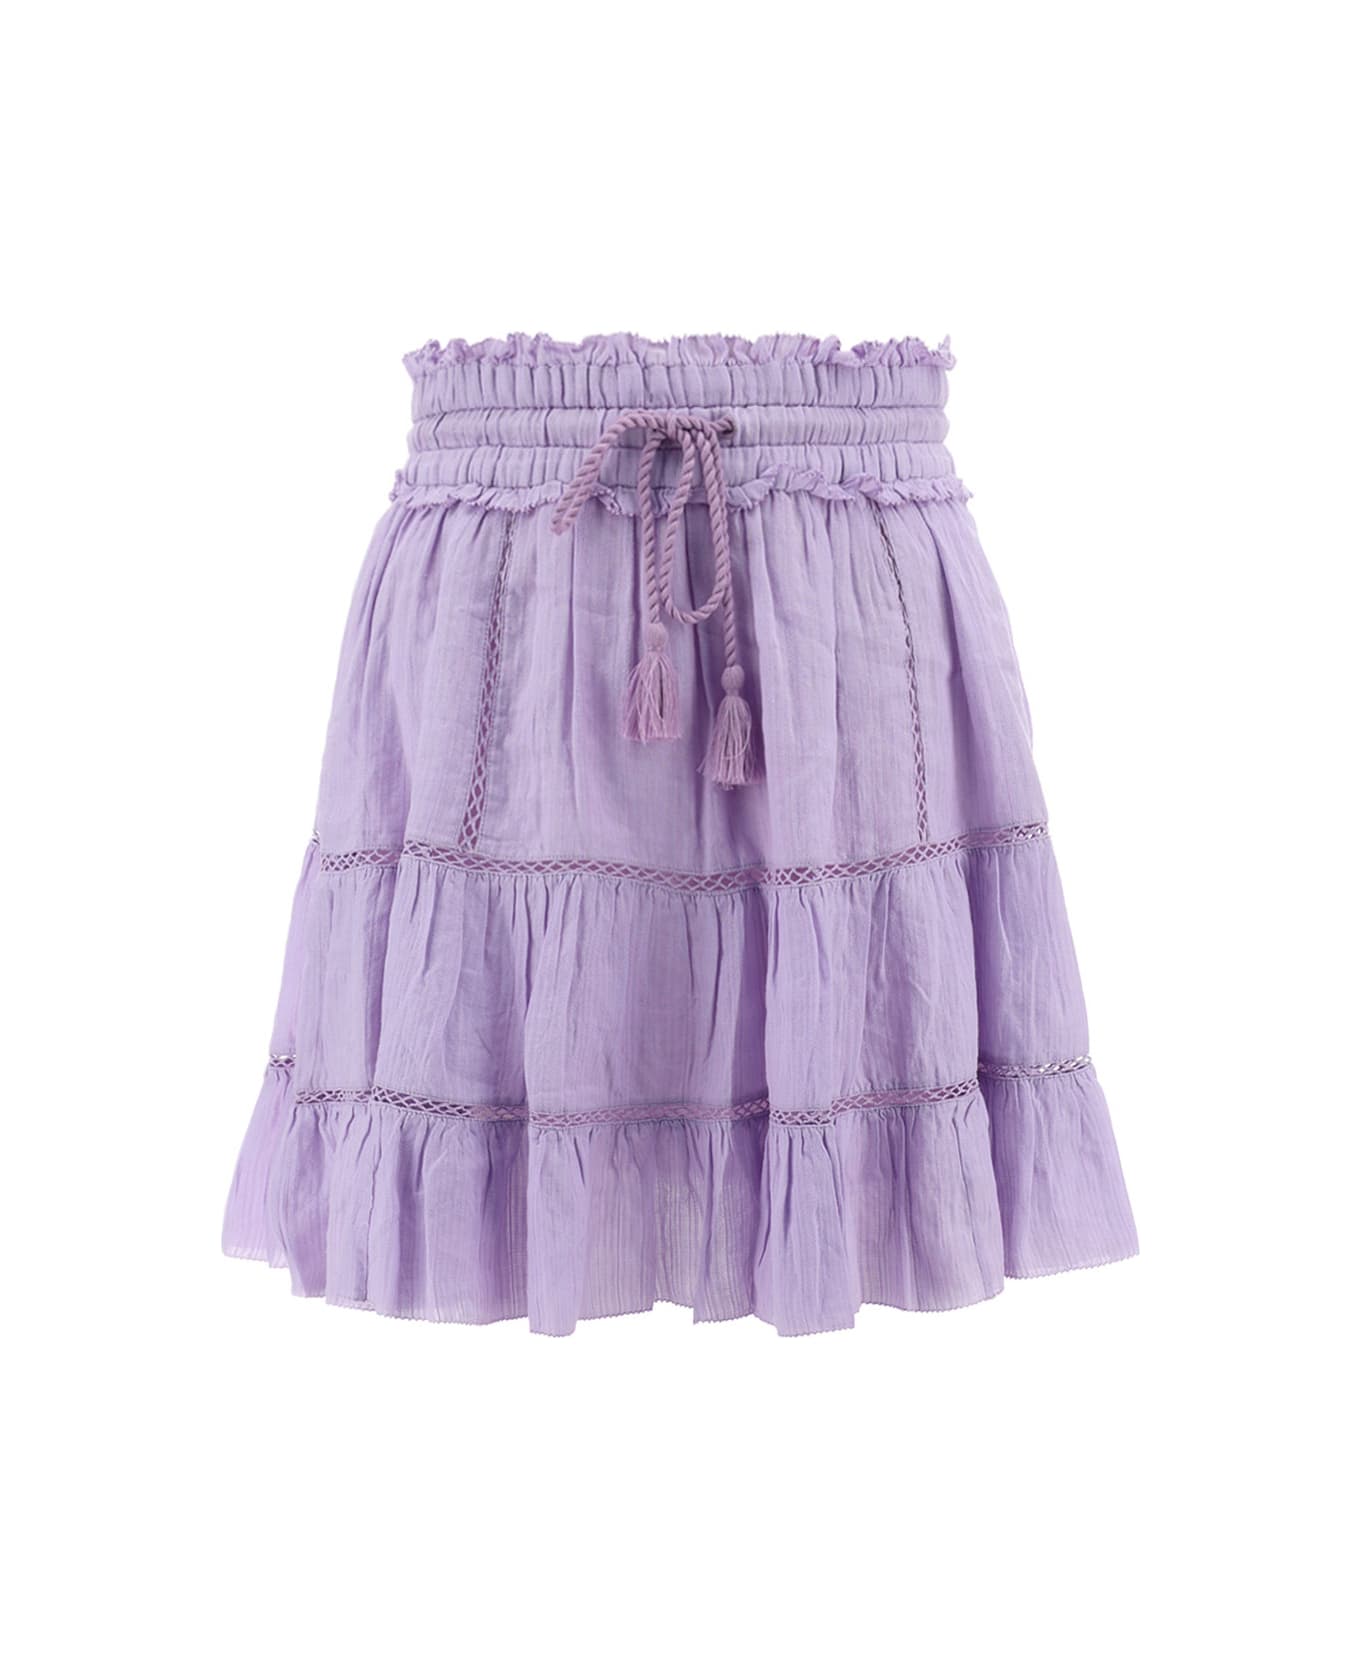 Marant Étoile Lioline Skirt - Lilac